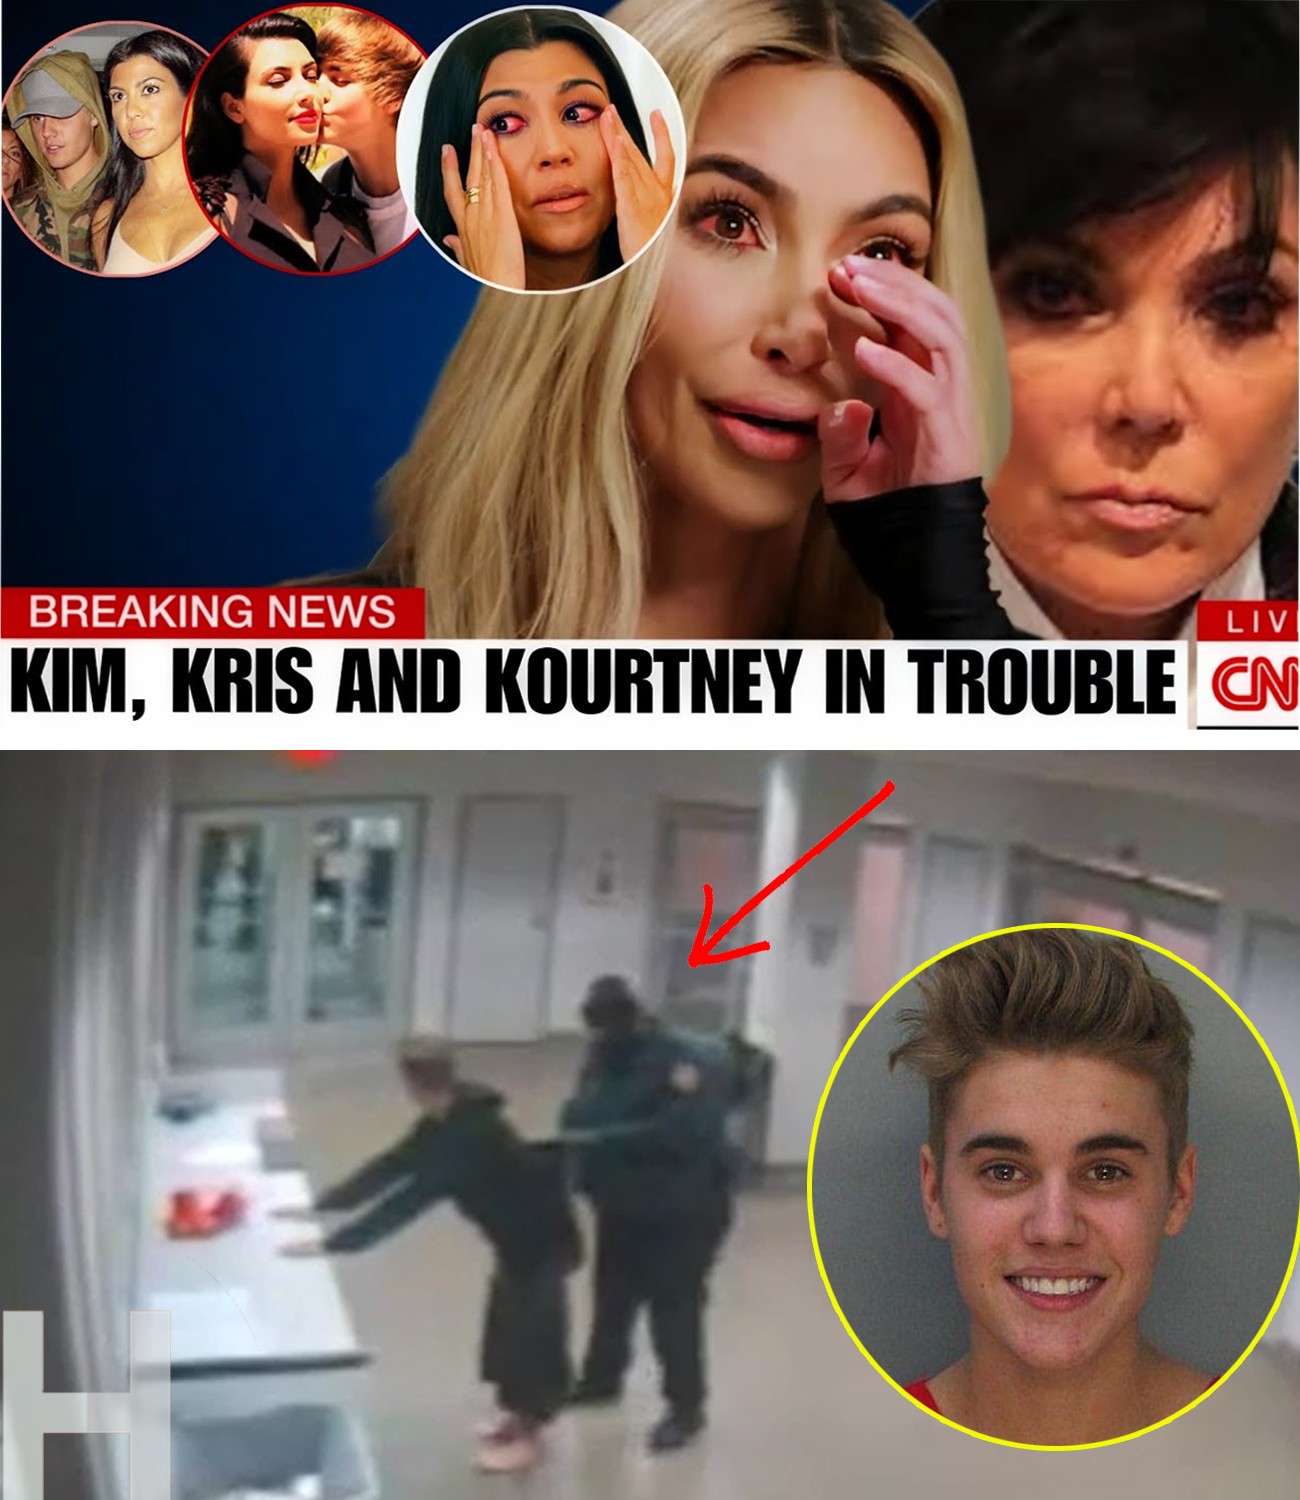 Kourtney, Kim K And Kris IN BIG TROUBLE After Justin Bieber FBI Video FOOTAGE Released